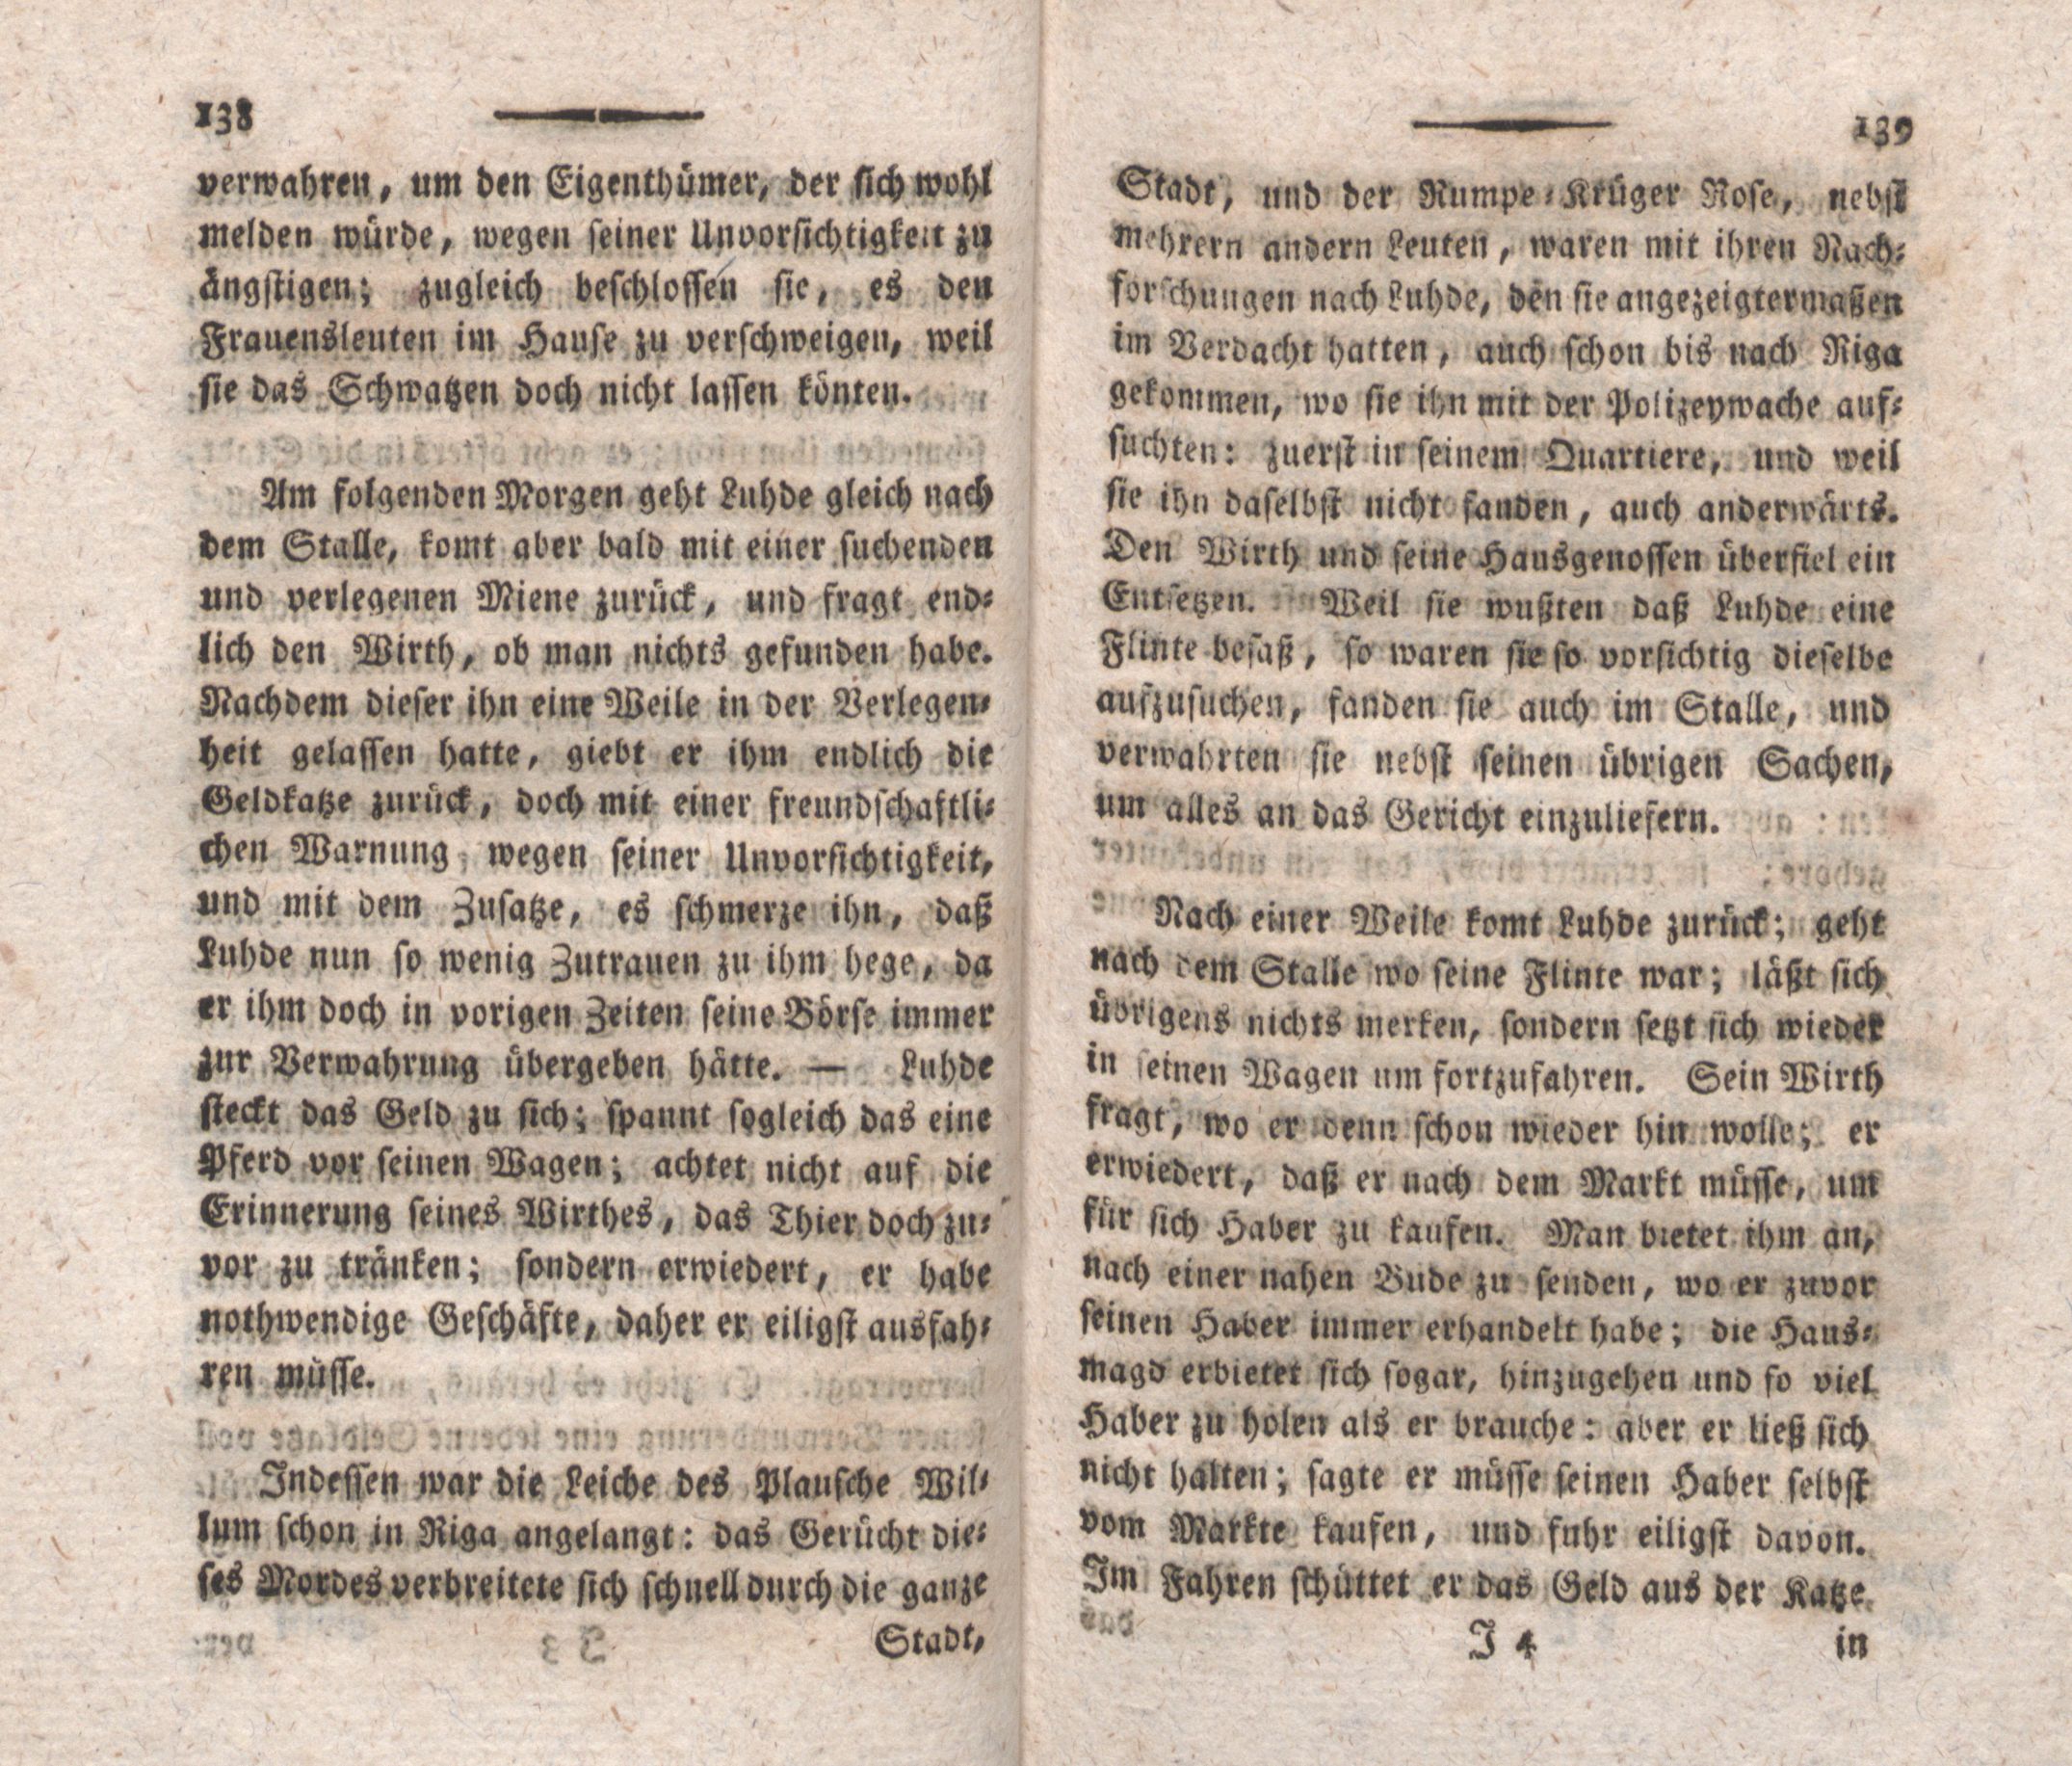 Neue nordische Miscellaneen [18] (1798) | 69. (138-139) Main body of text